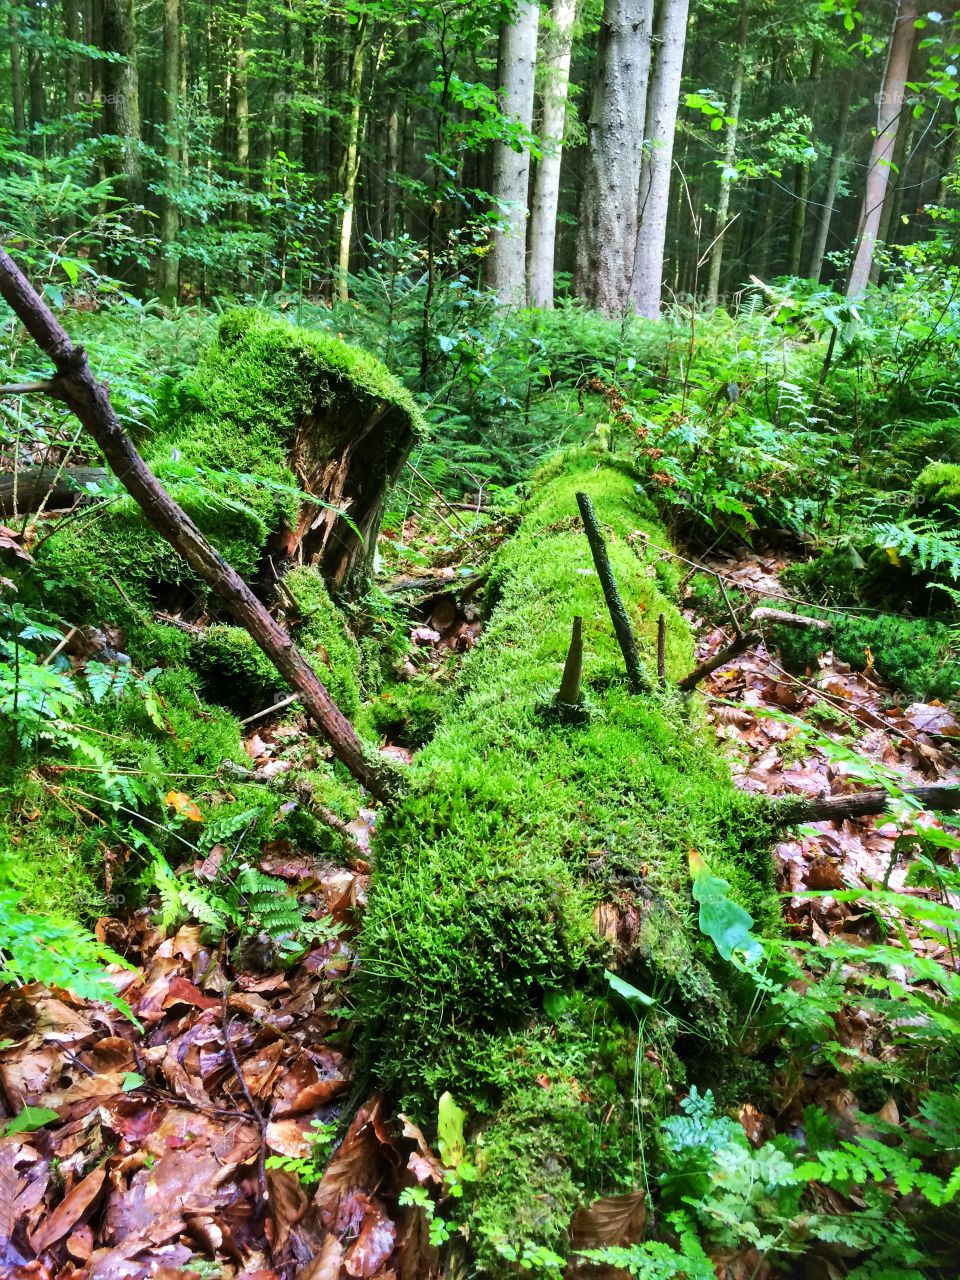 Log with moss